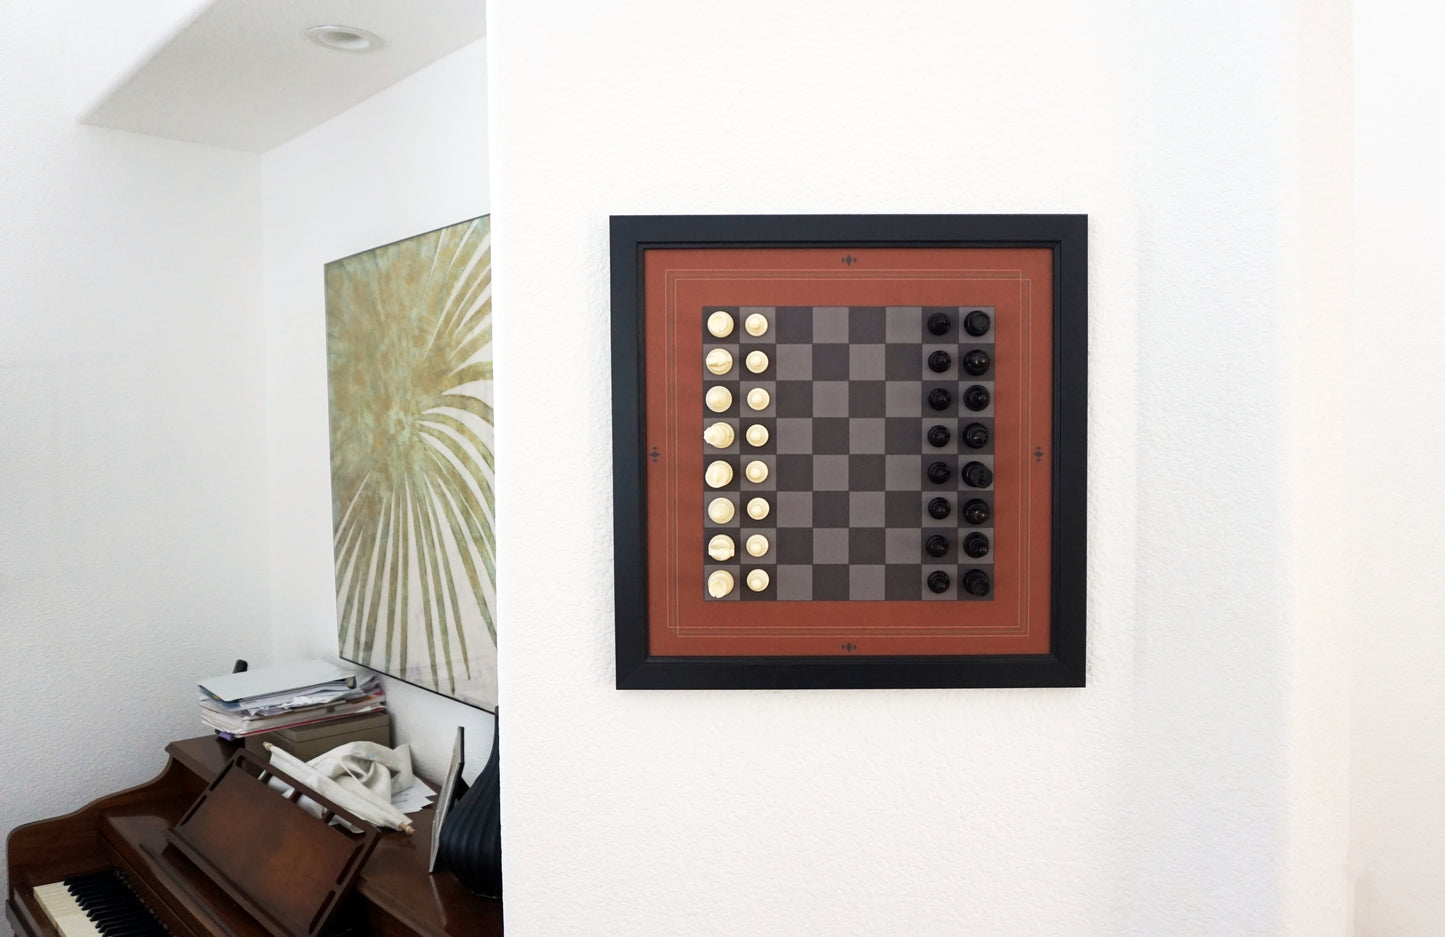 Wall Framed Chess Boards - Modern, Retro, Black & White, Beach - Chess Decor